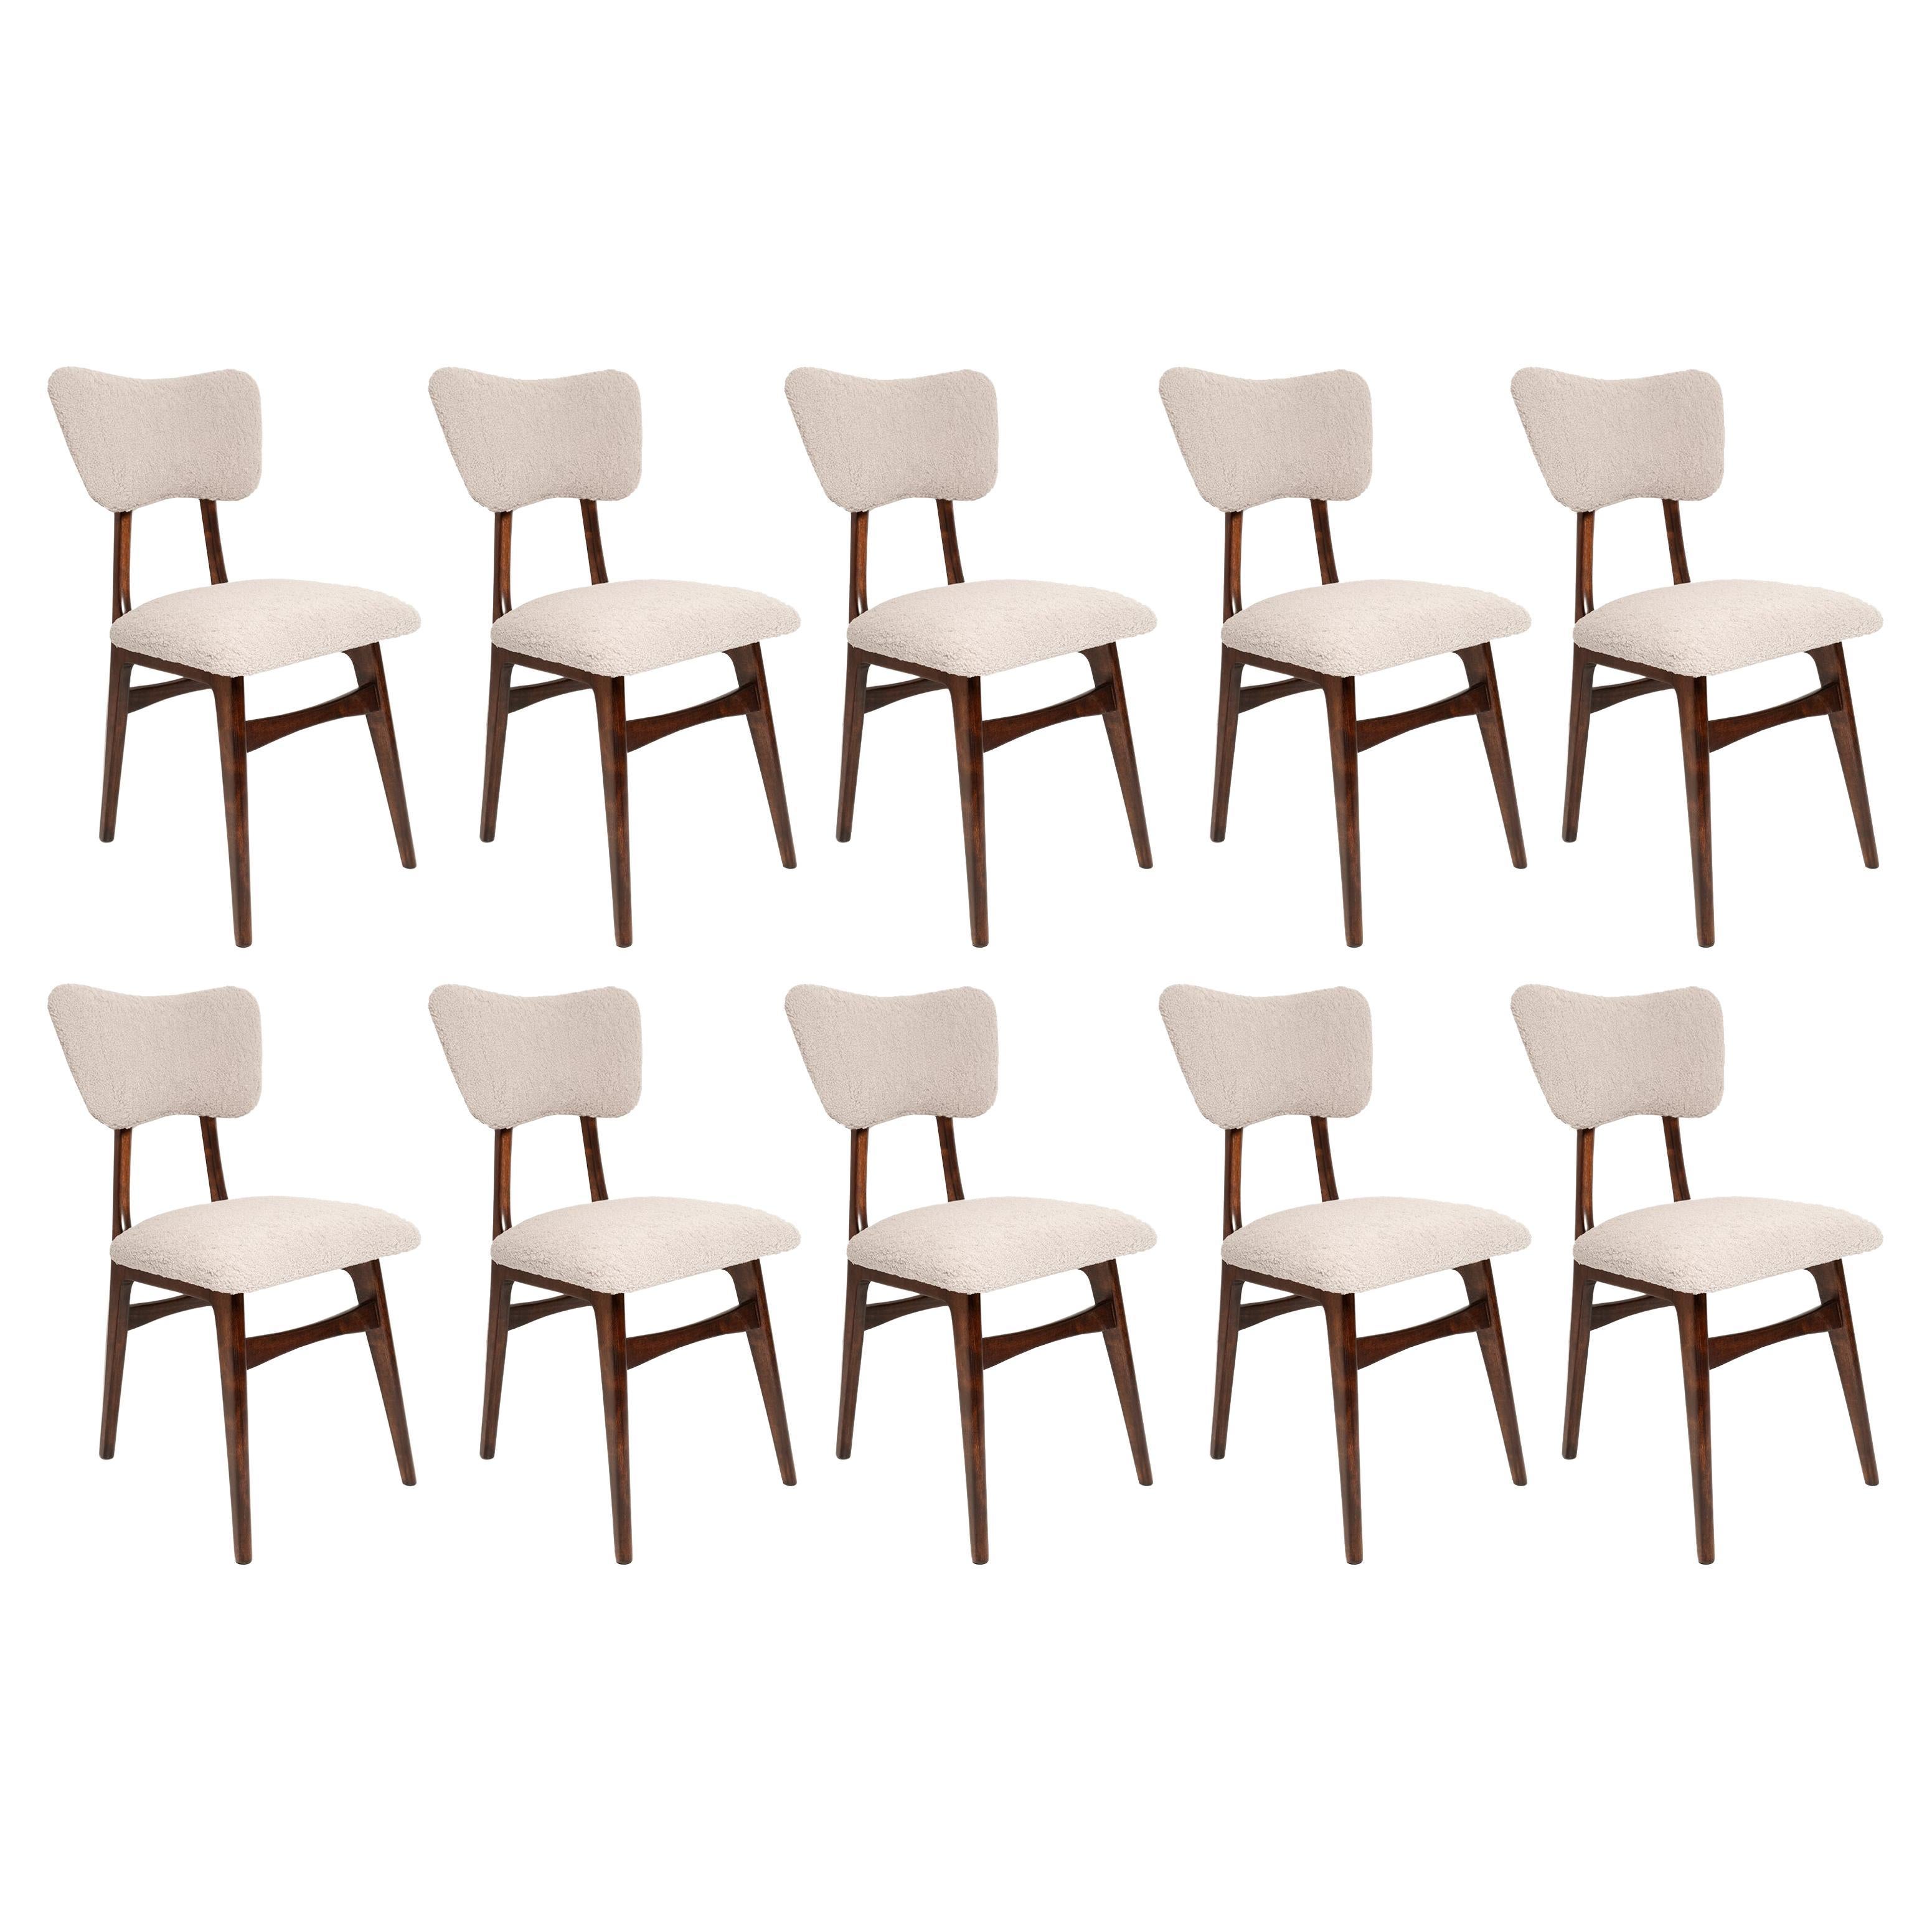 Set of Ten Mid Century Chairs, Light Gray Boucle, Dark Walnut Wood, Europe, 1960s